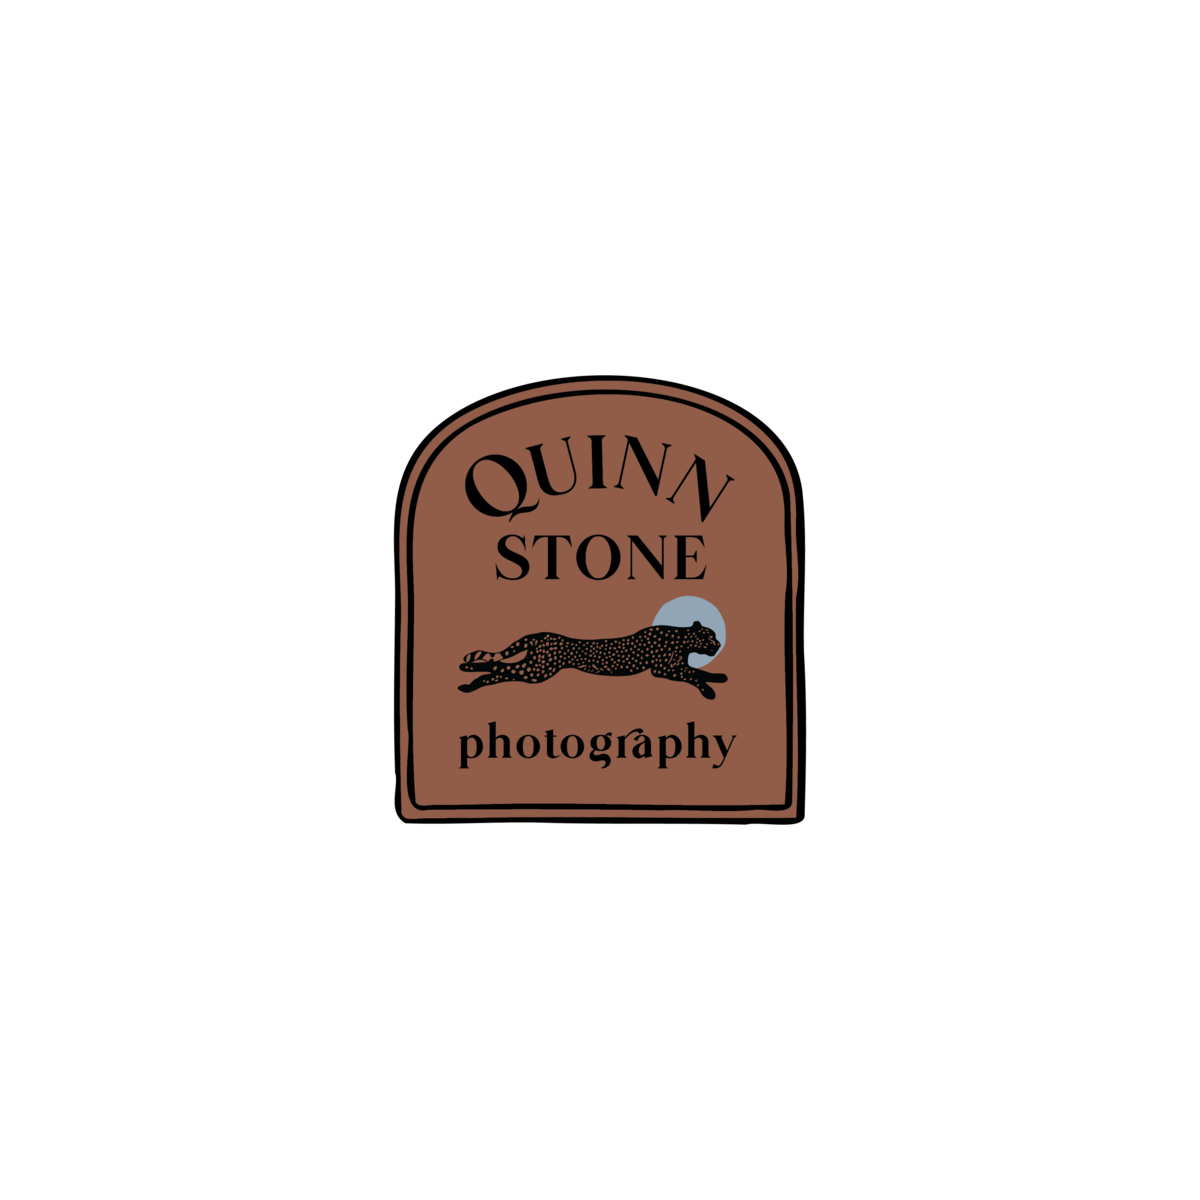 Quinn Stone Photography Final Files 12x12 -04